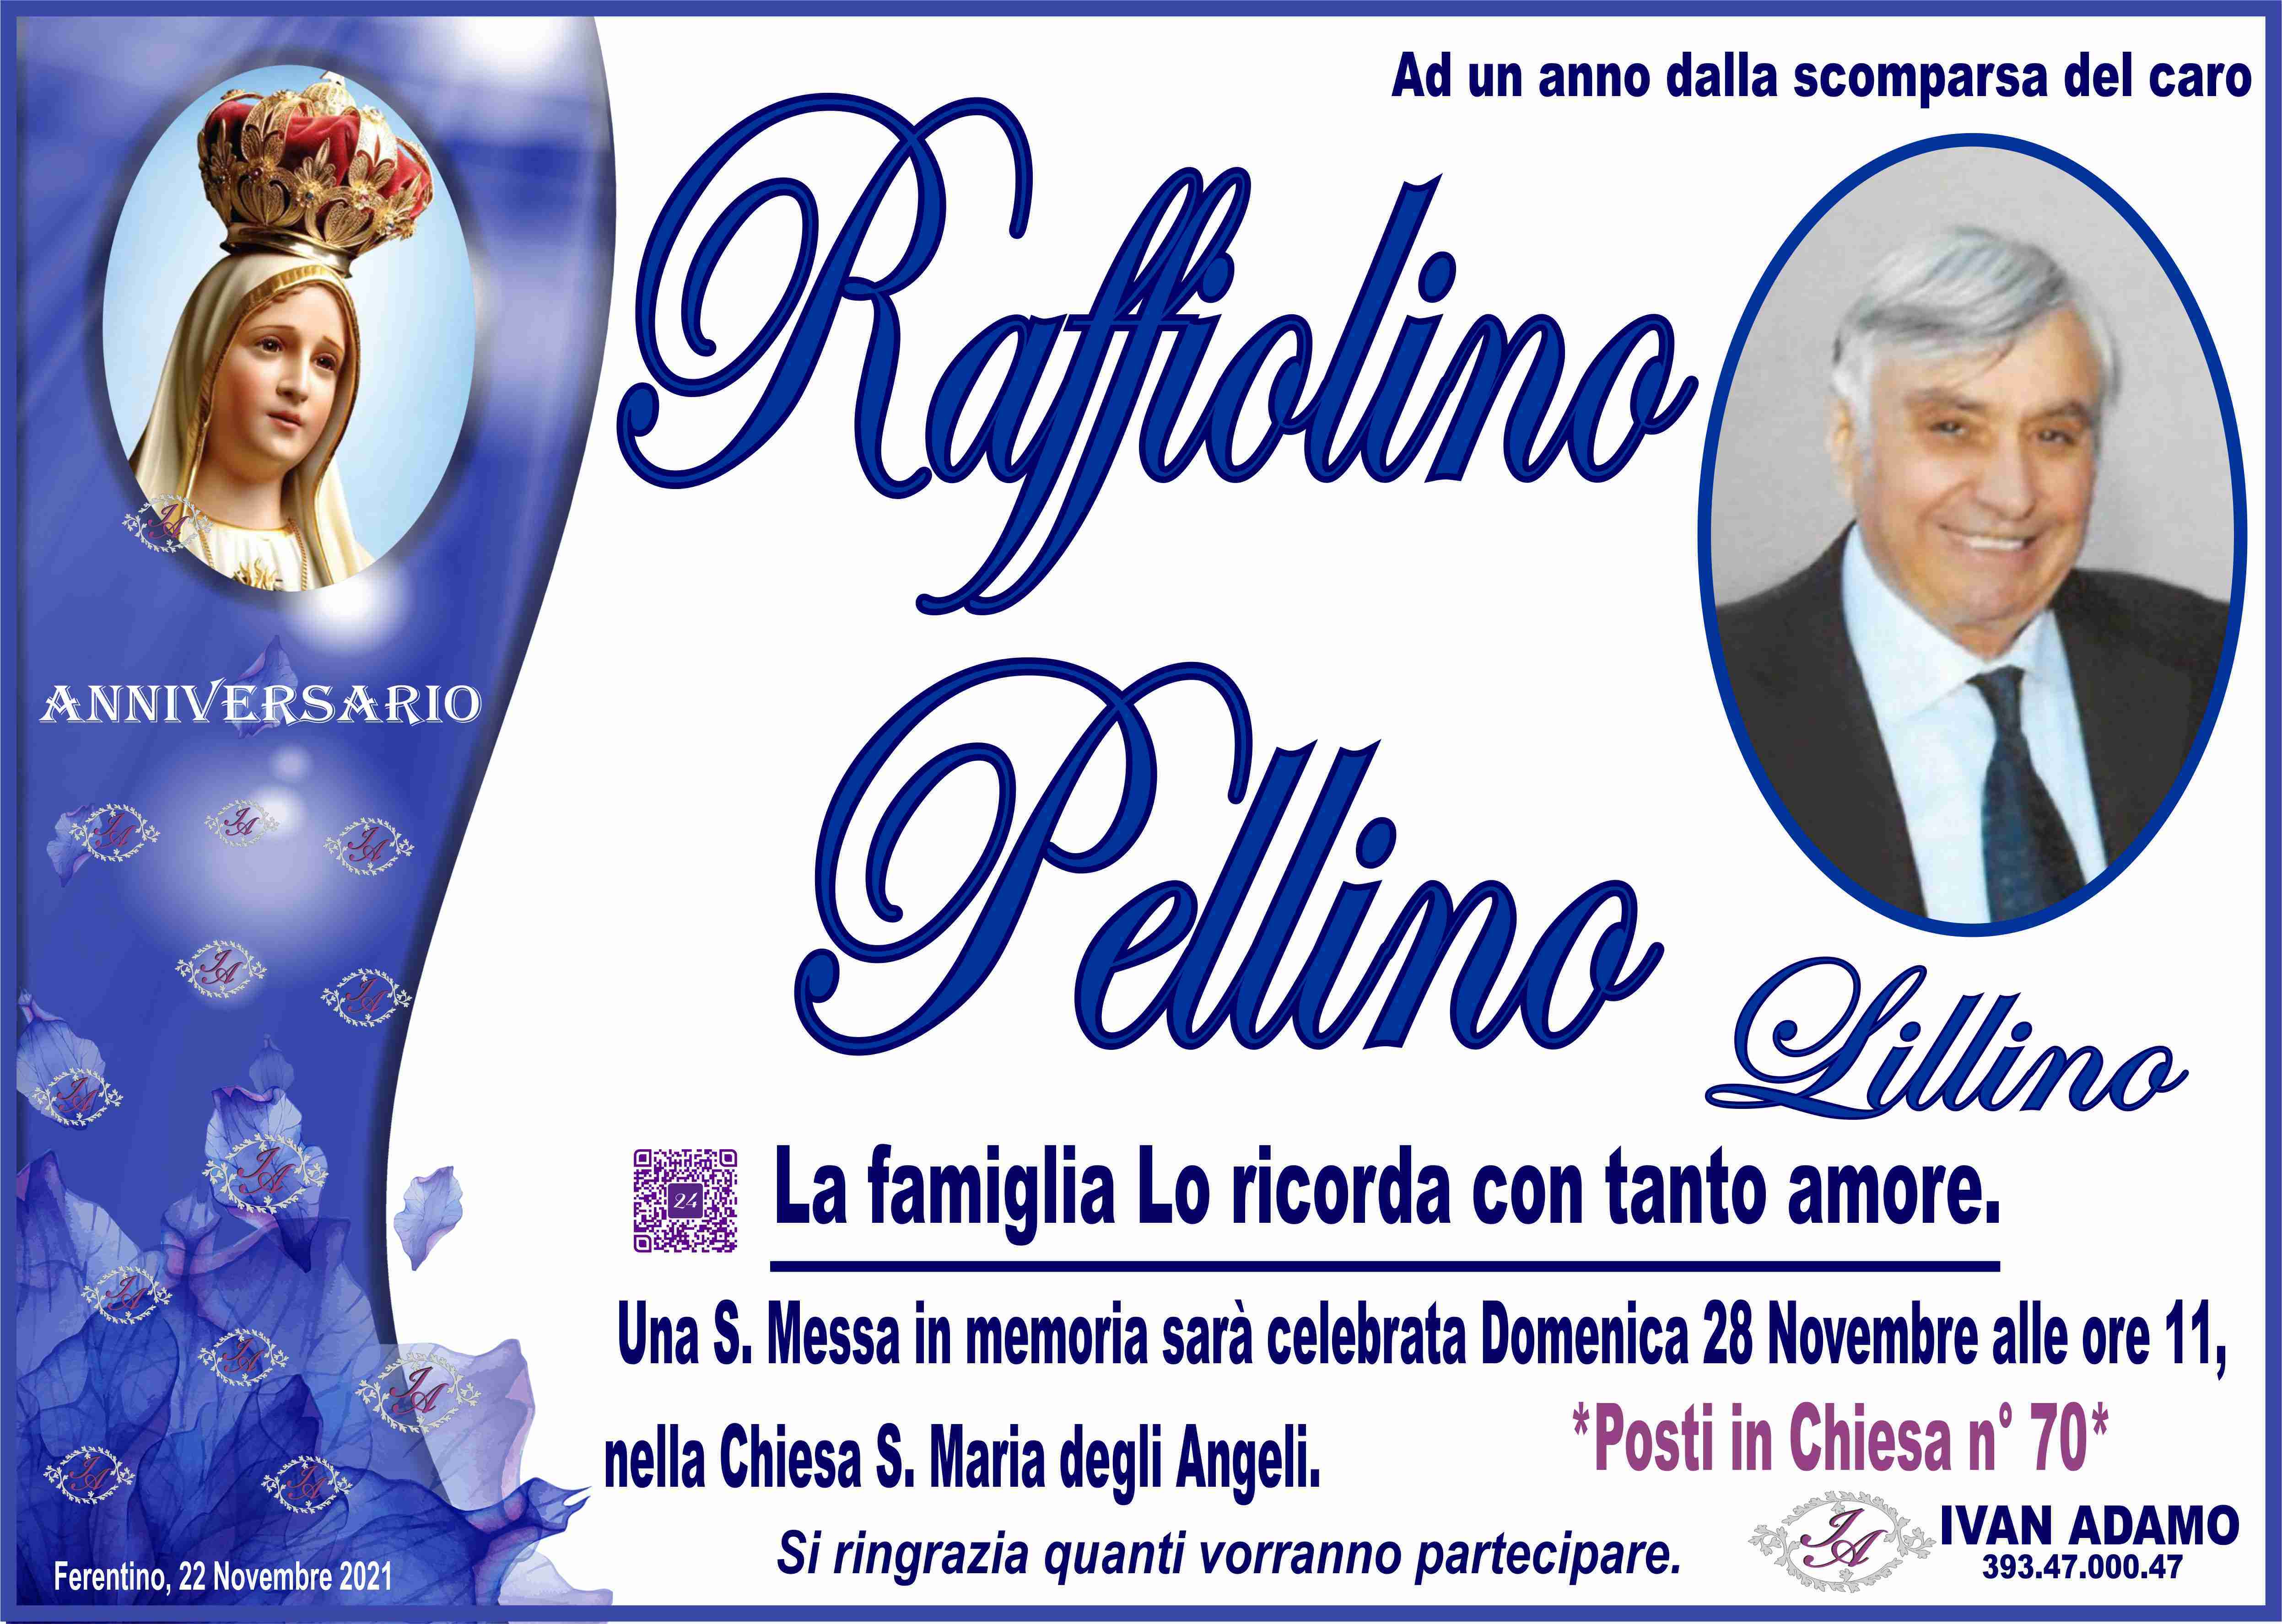 Raffiolino Pellino (Lillino)